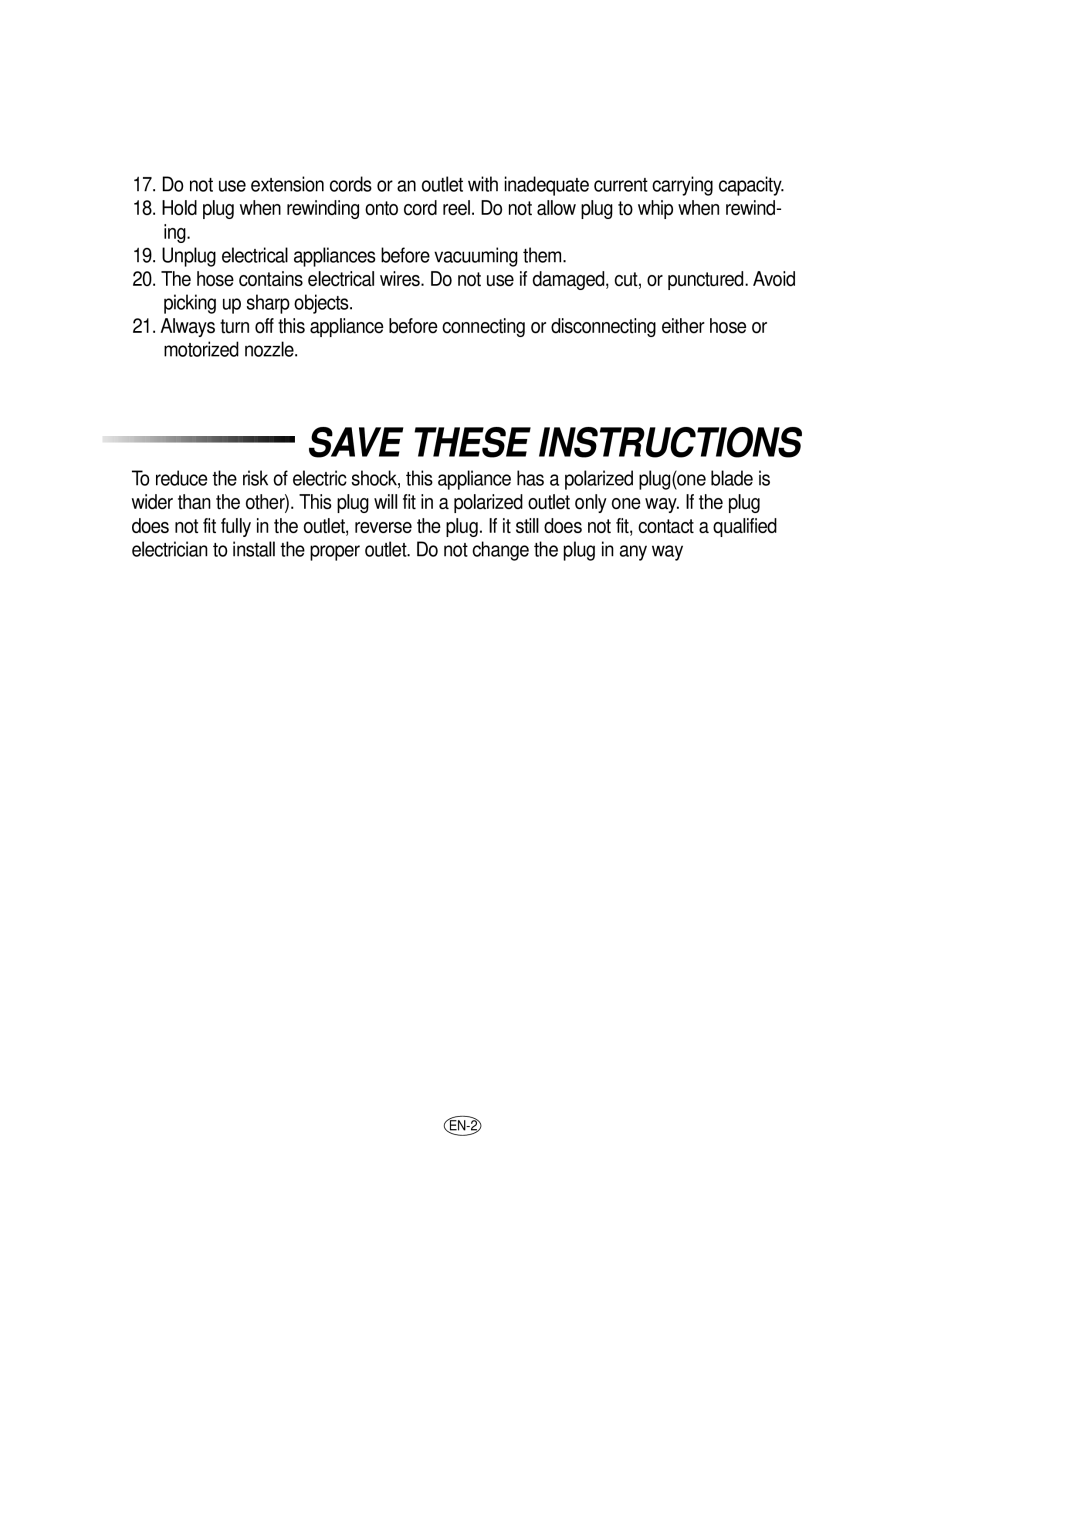 Samsung DJ68-00079J manual Save These Instructions, EN-2 